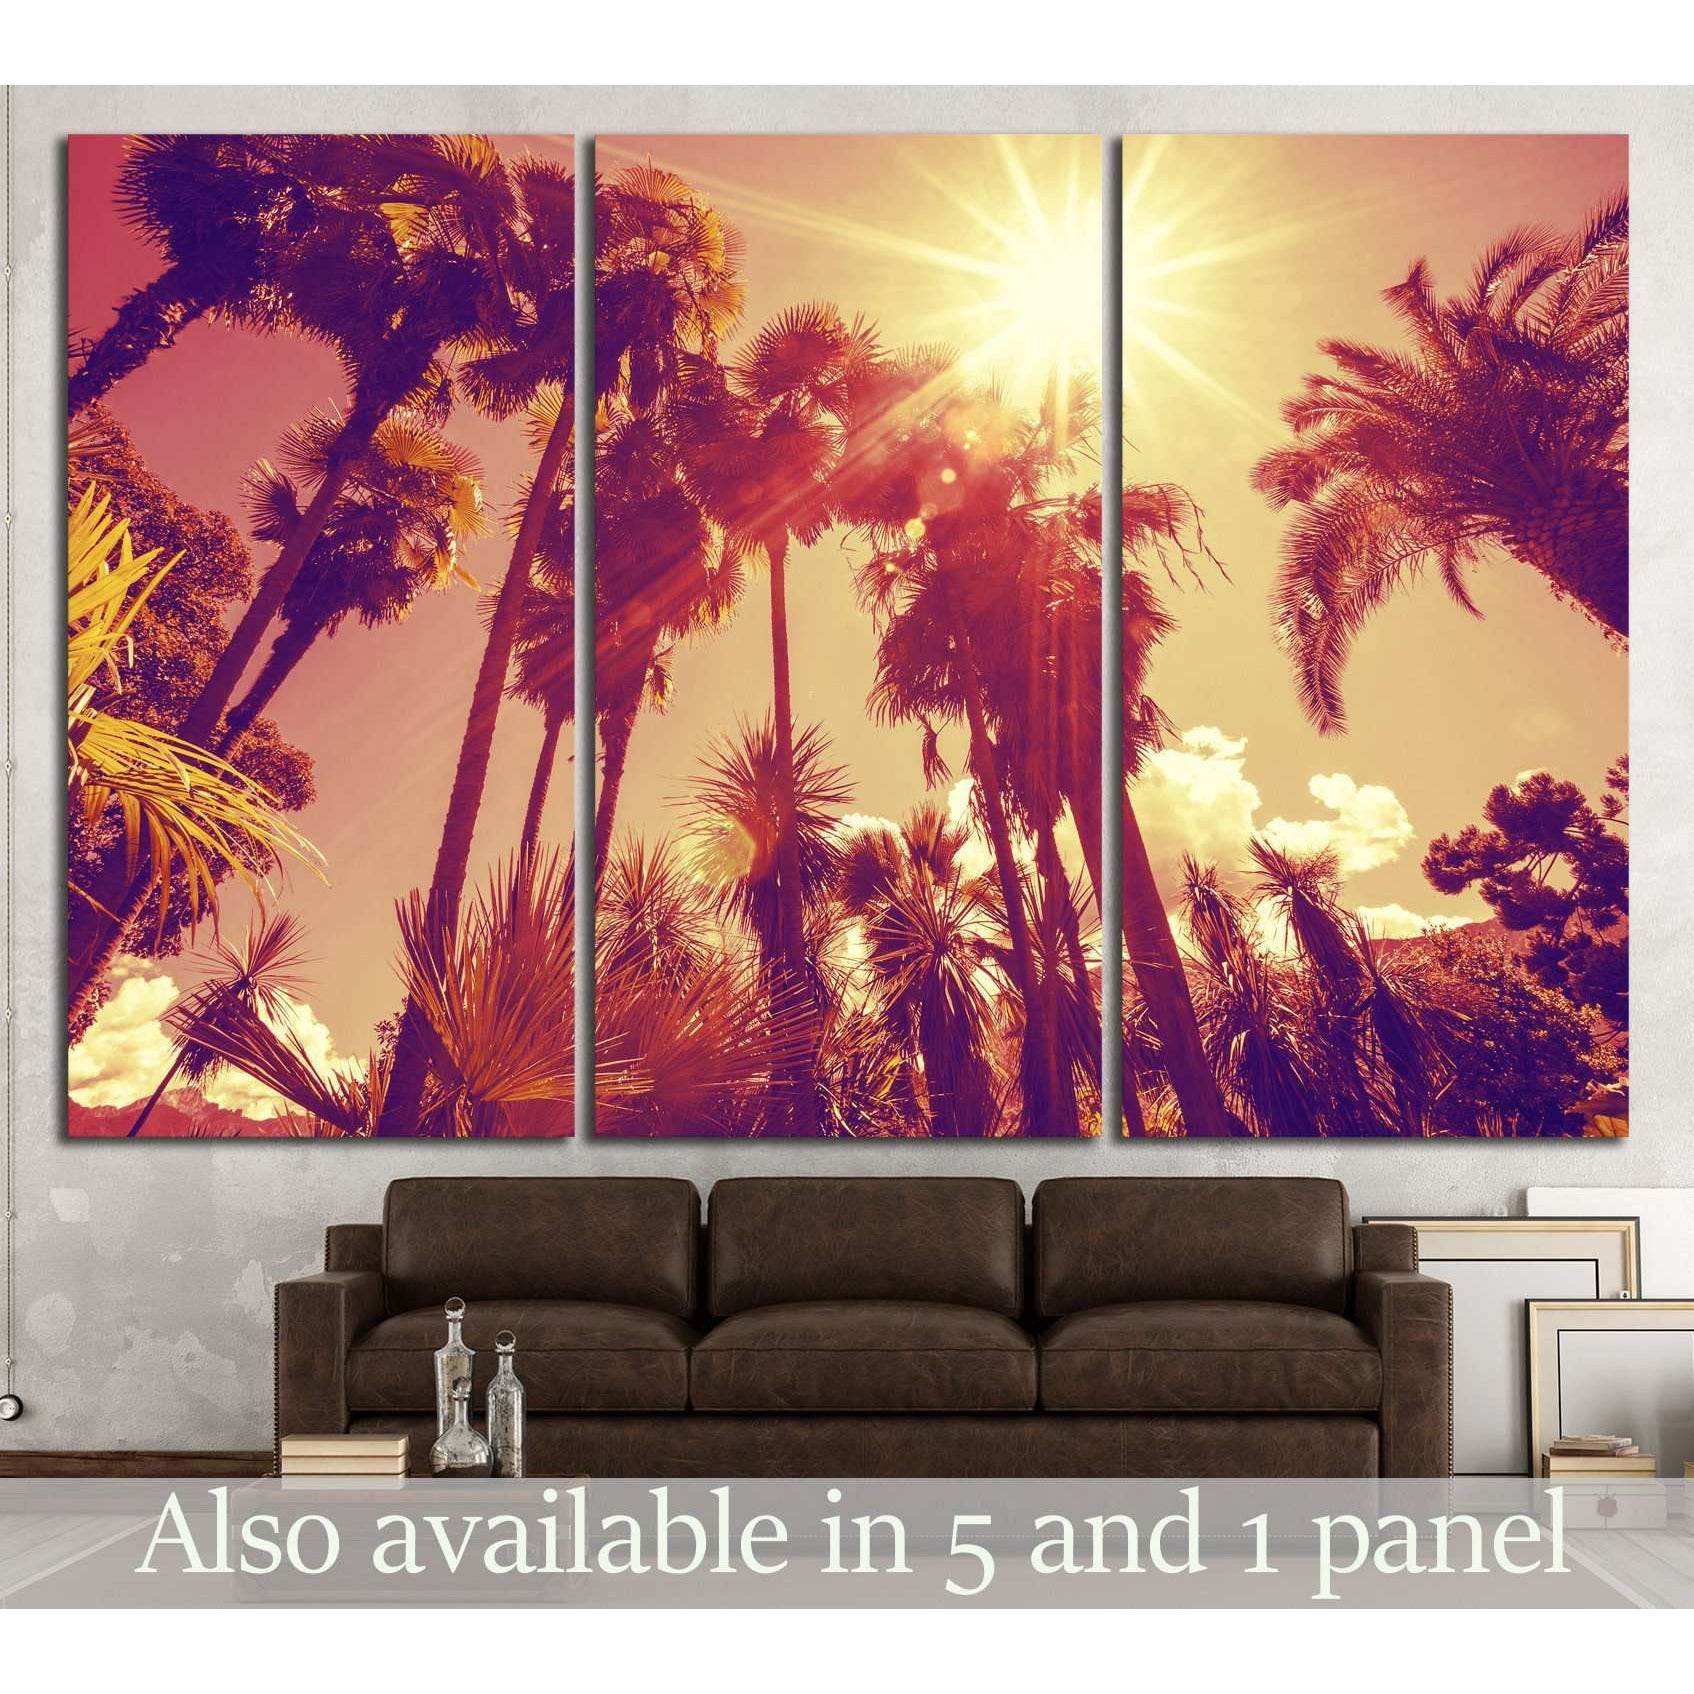 Sun shining through tall palm trees №897 Ready to Hang Canvas Print